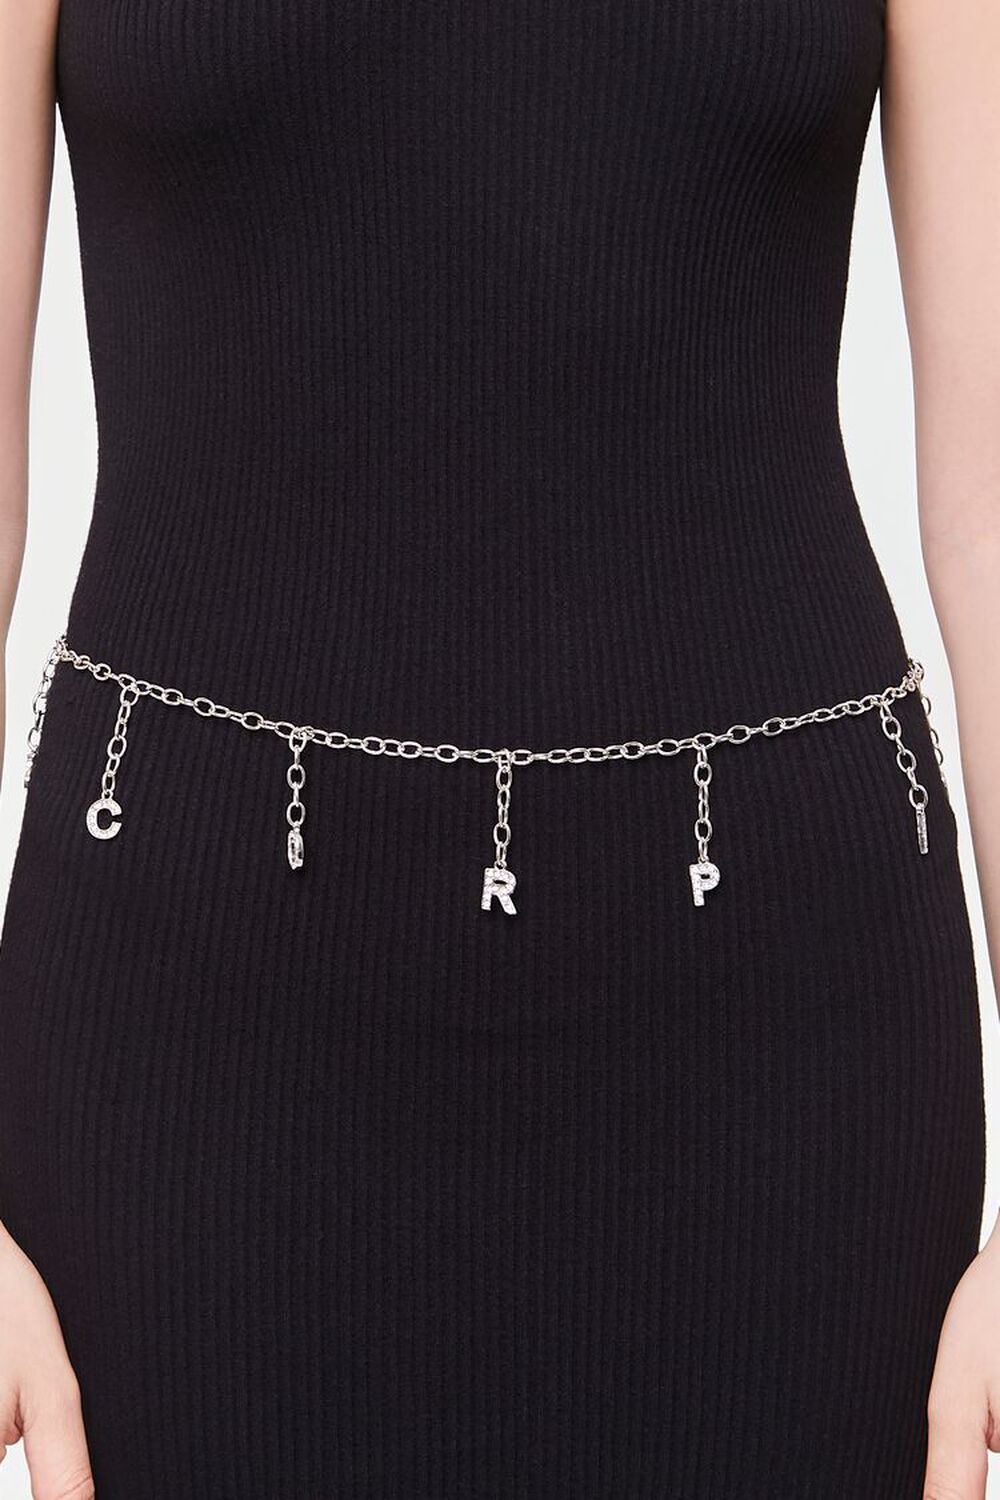 SILVER/SCORPIO Zodiac Charm Chain Hip Belt, image 1